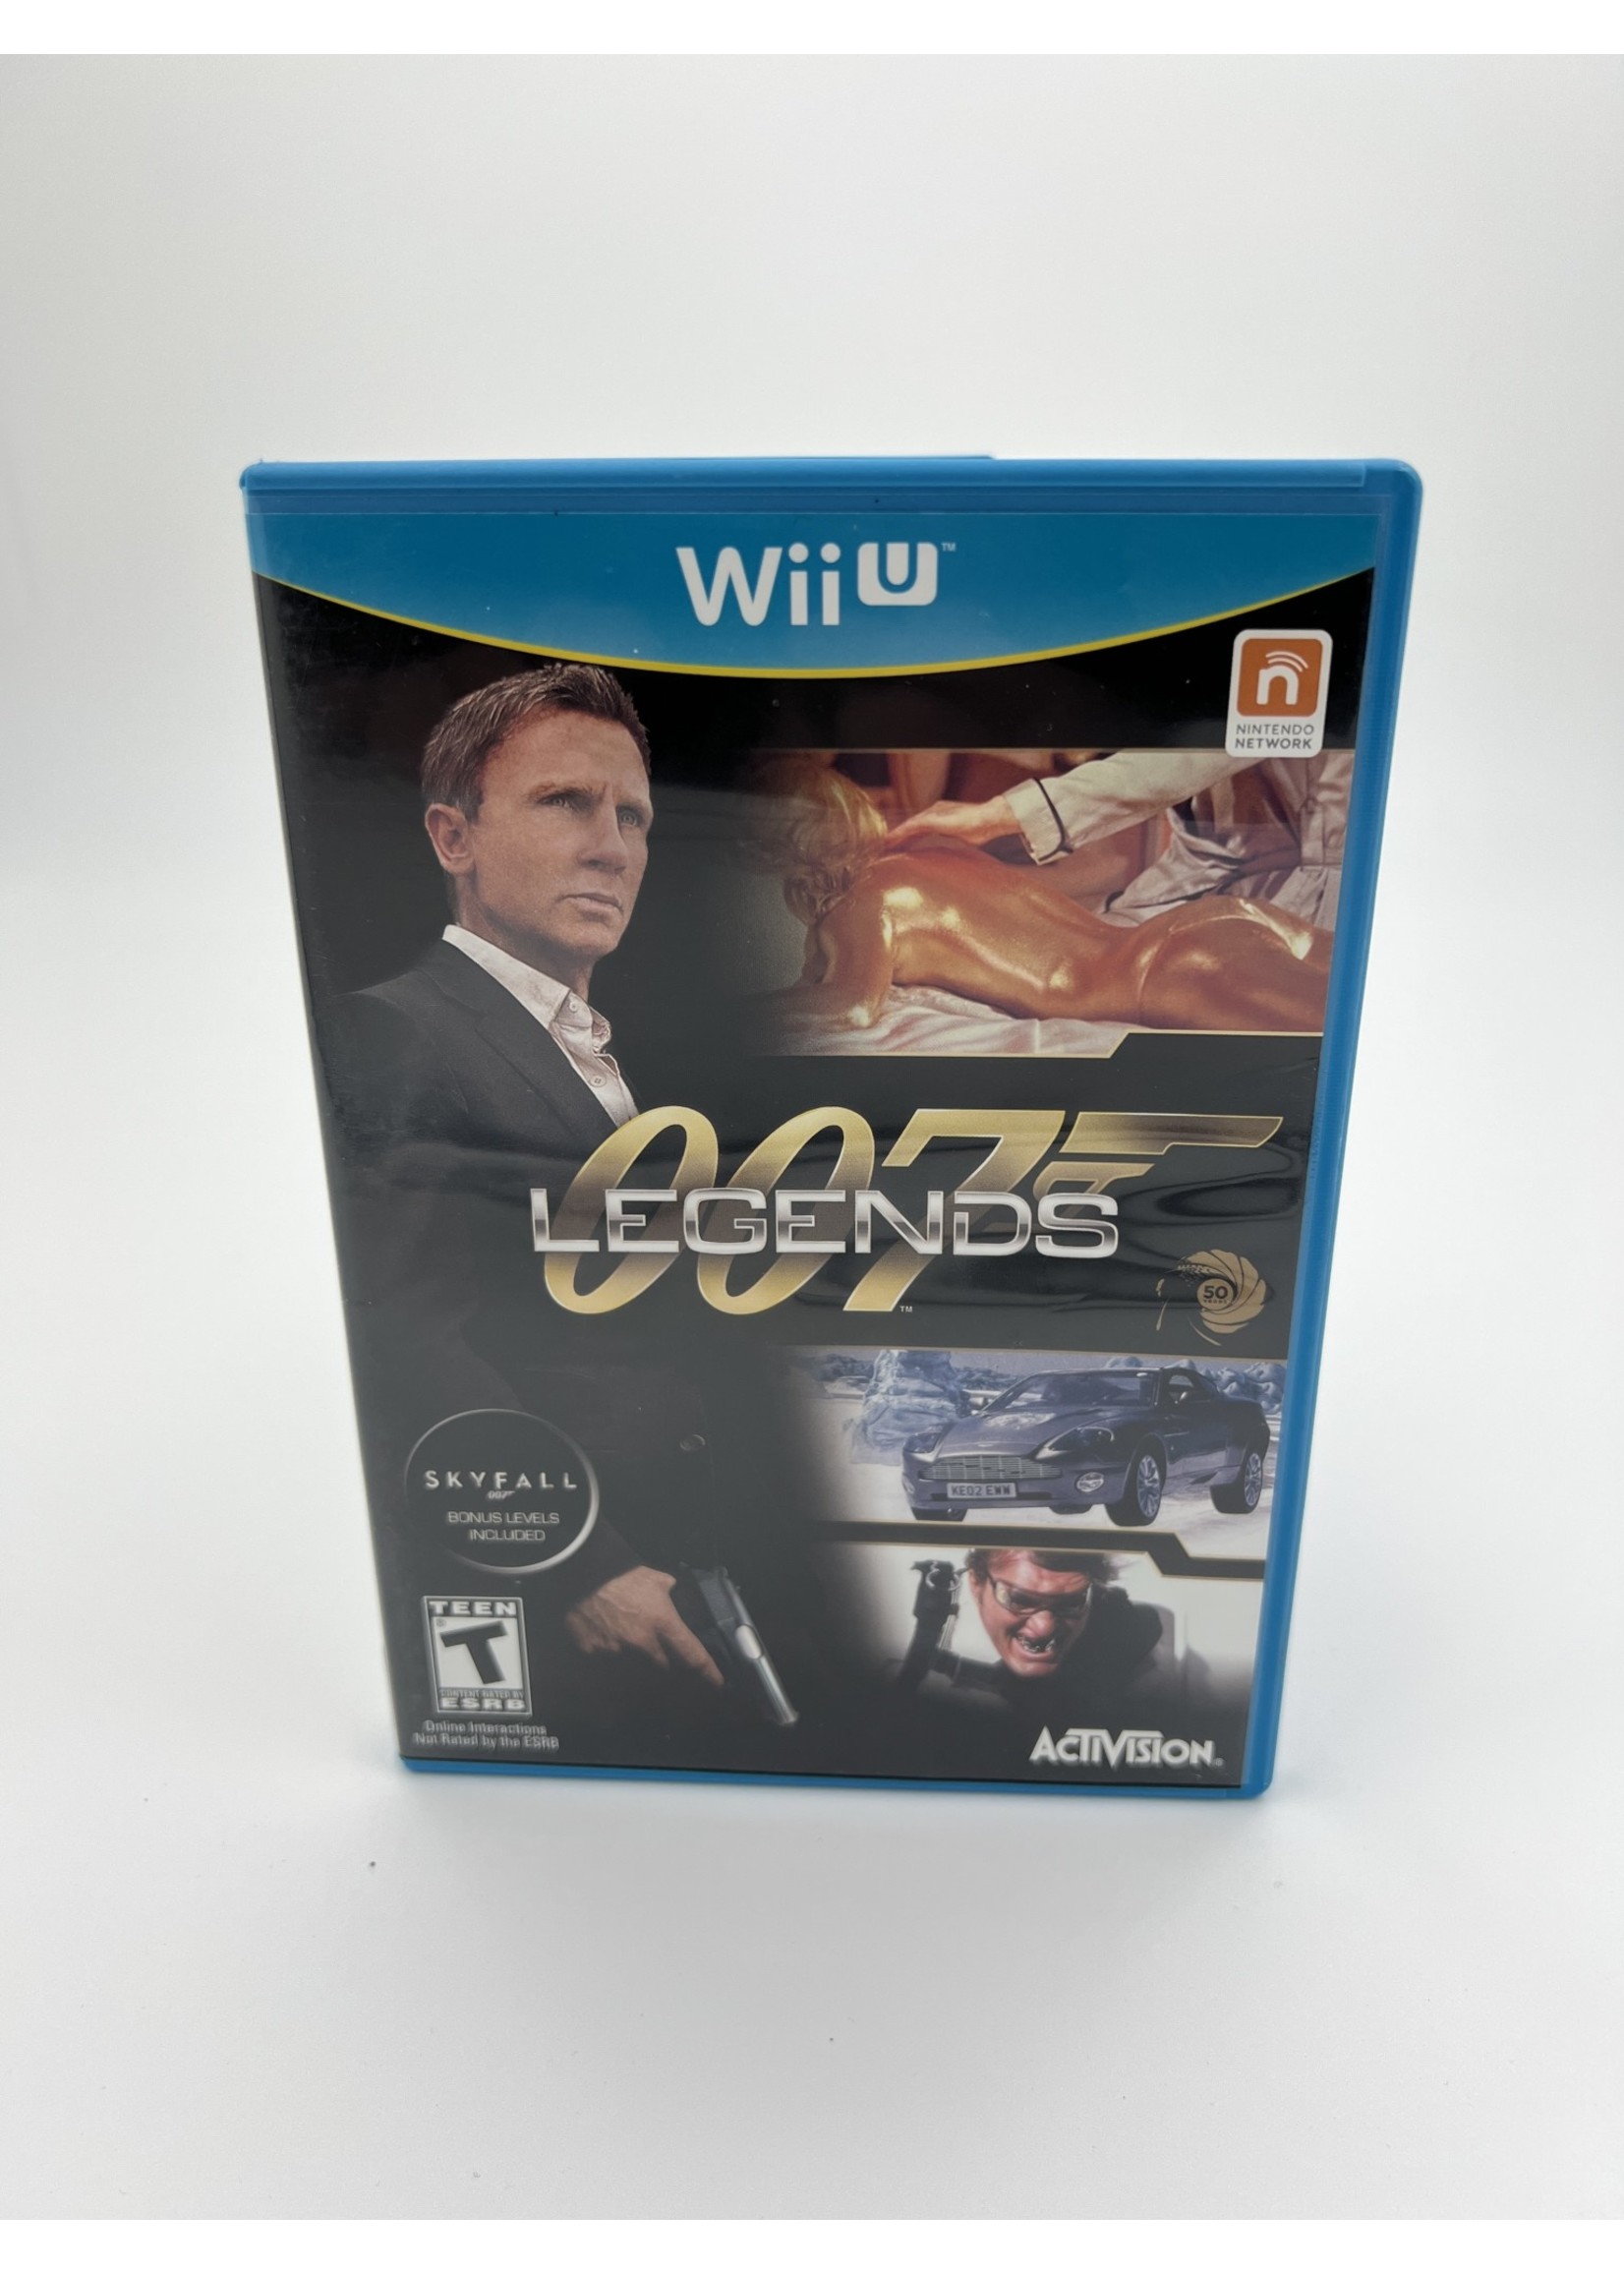 Nintendo 007 Legends Wii U